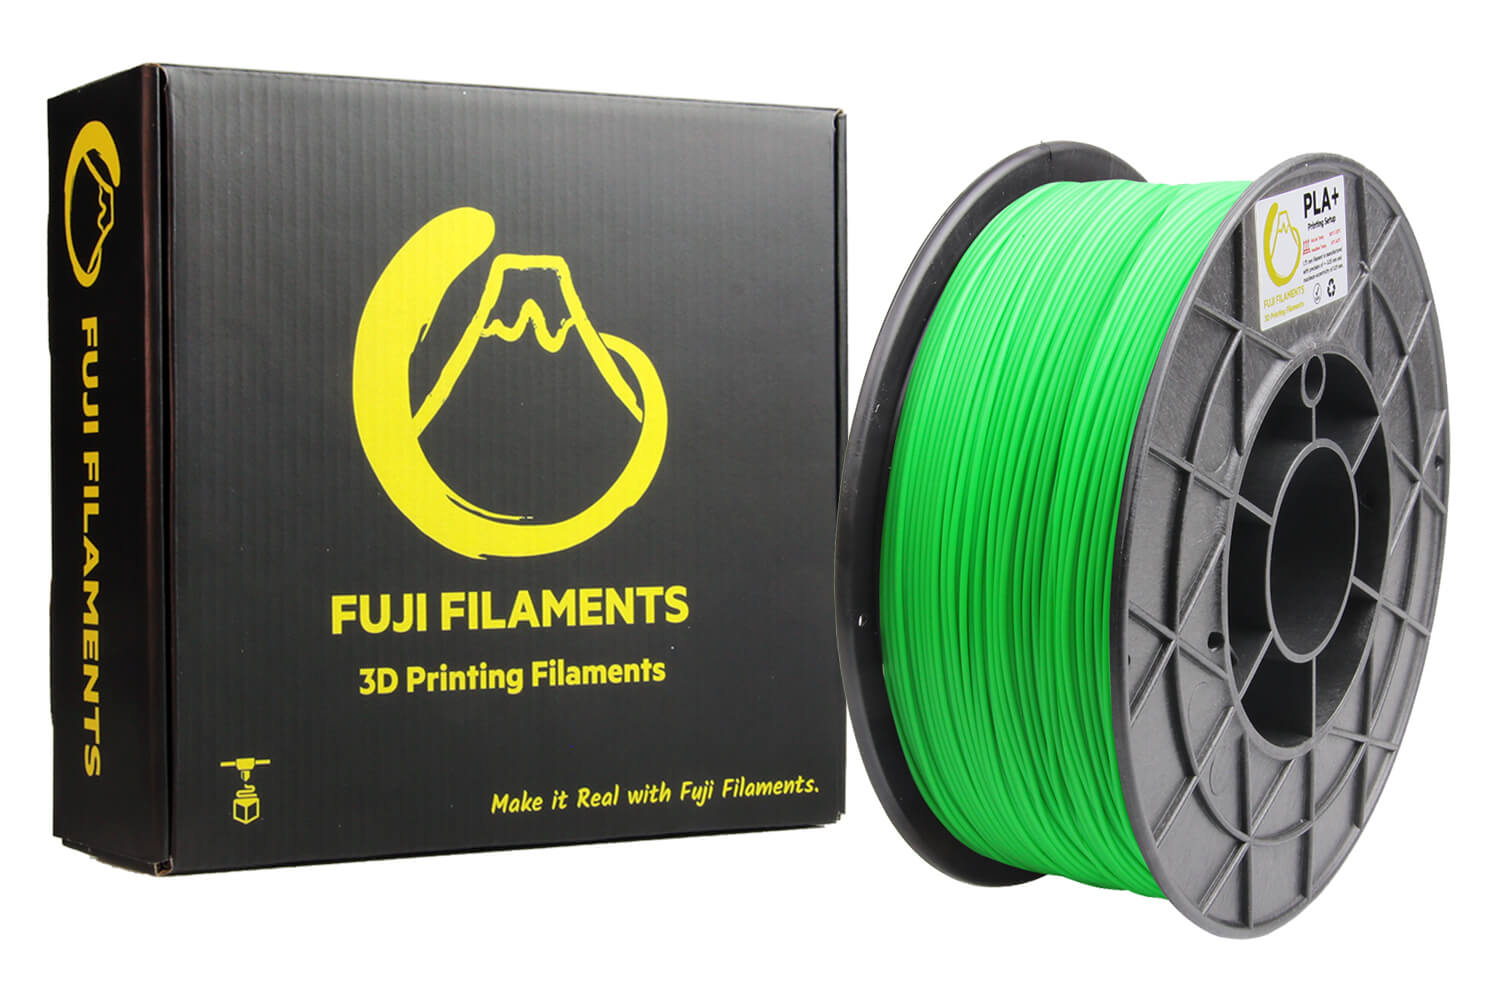 fuji-acik-yesil-pla+-filament-1kg-1.jpg (132 KB)